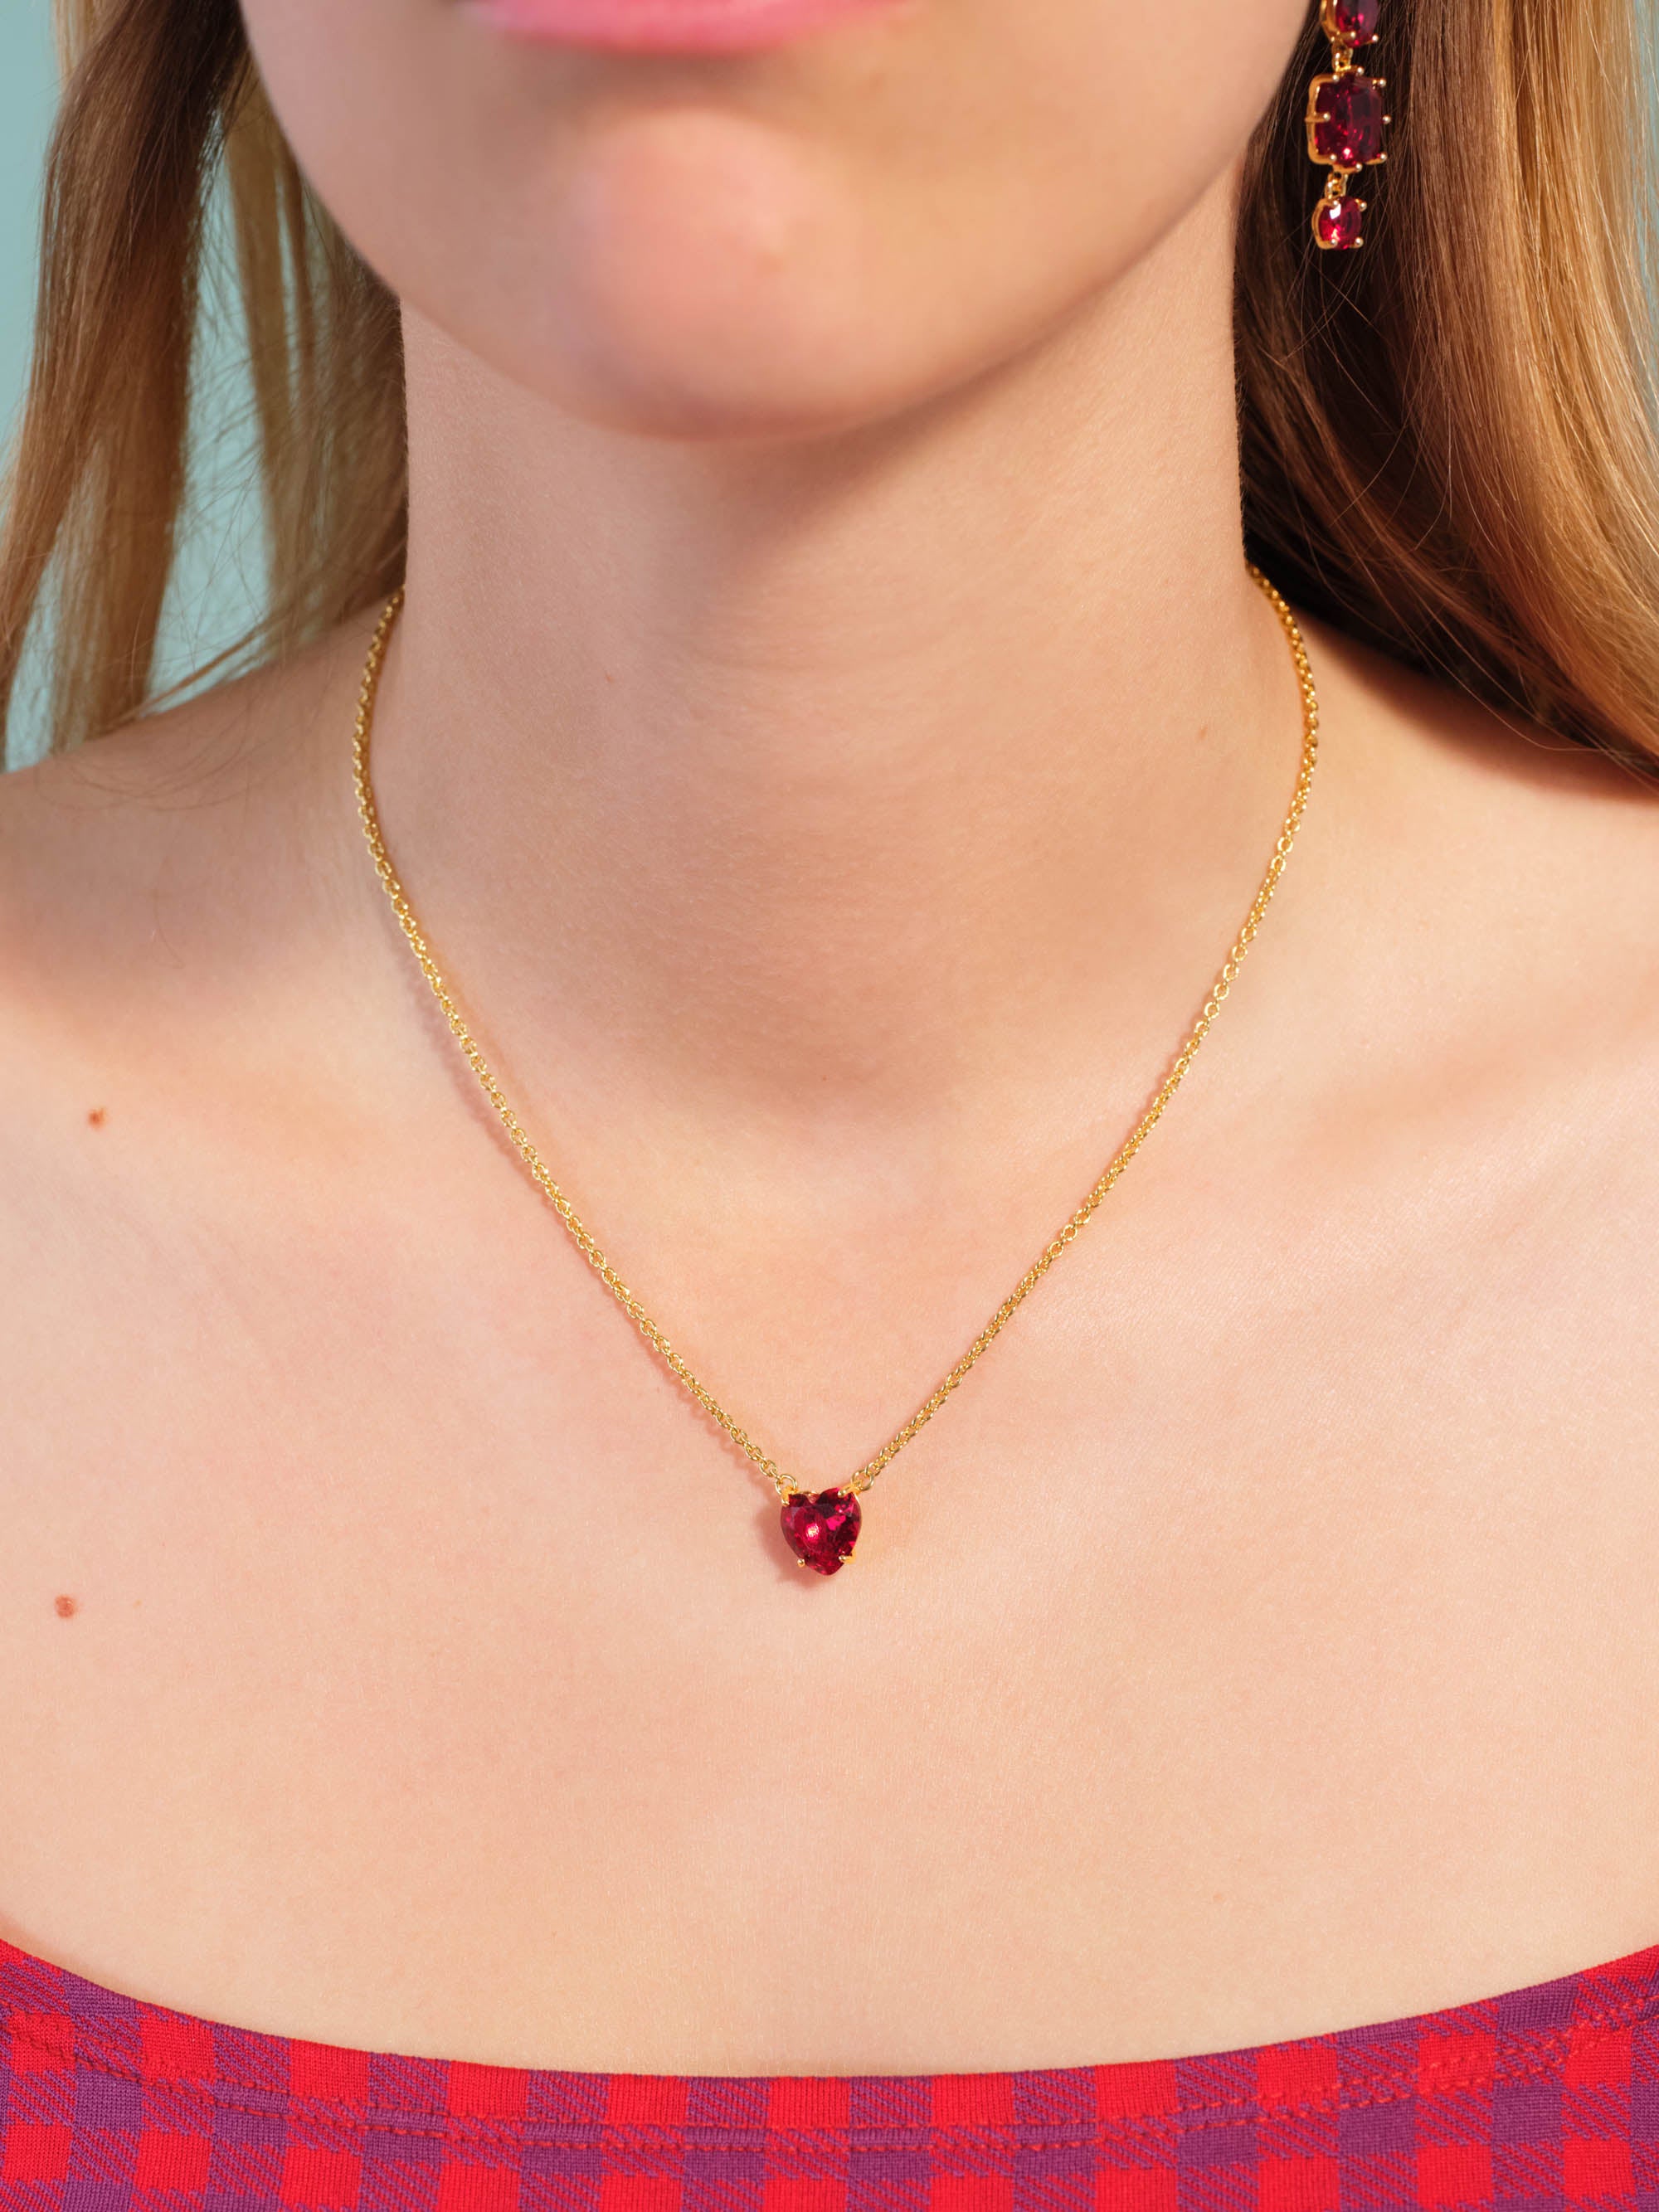 Garnet red diamantine Heart pendant necklace